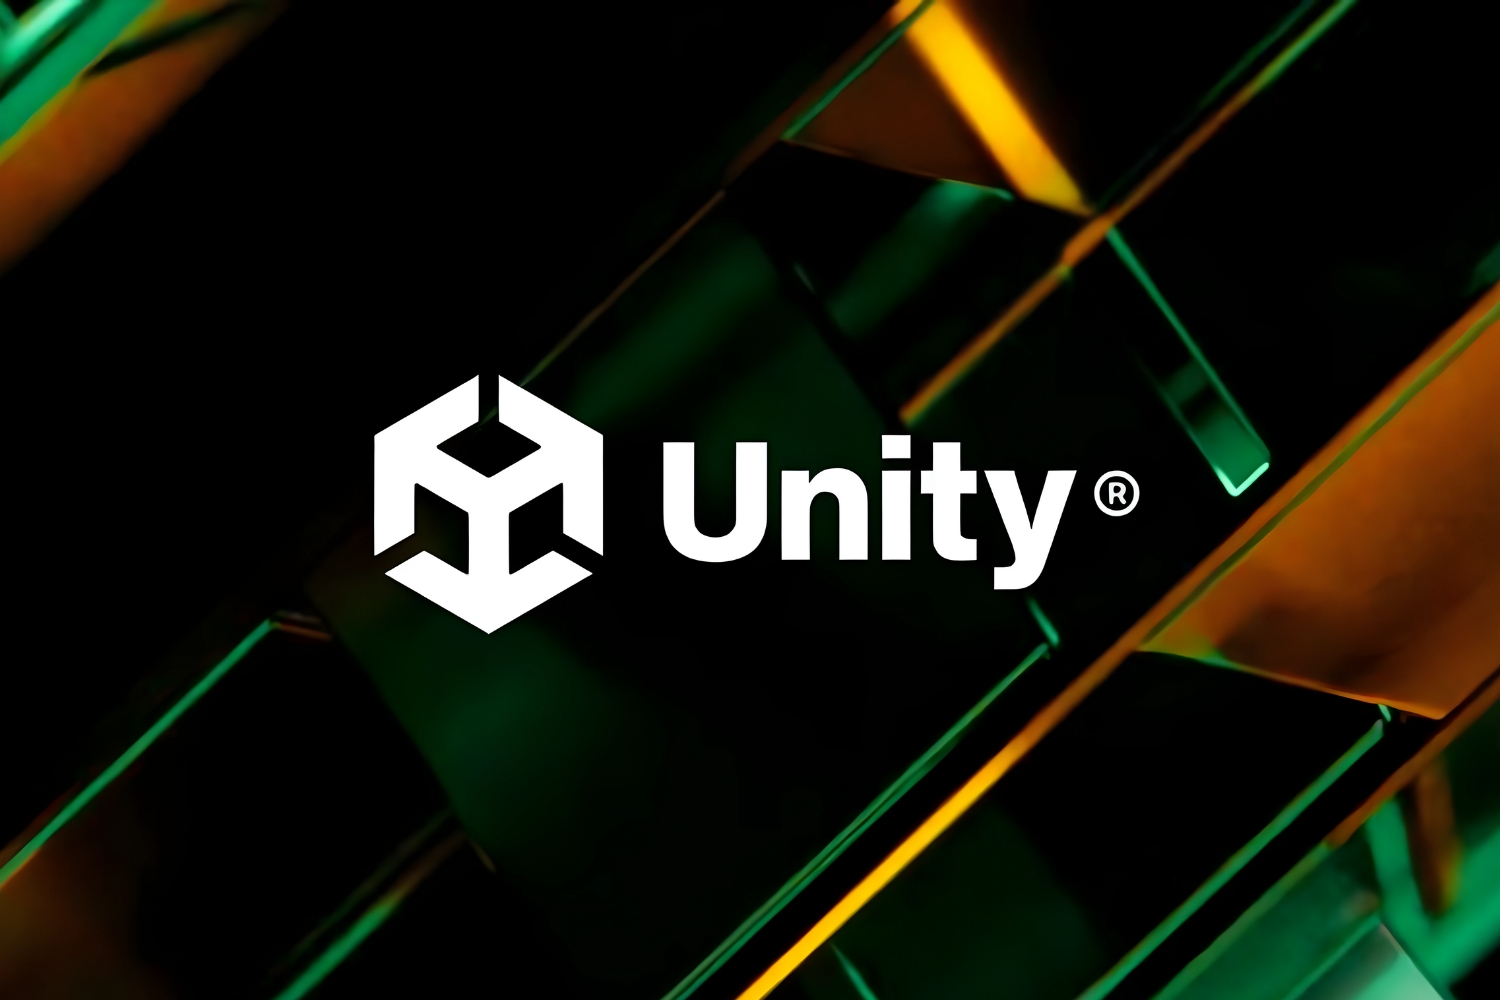 logo unity sur fond design 3D vert orange